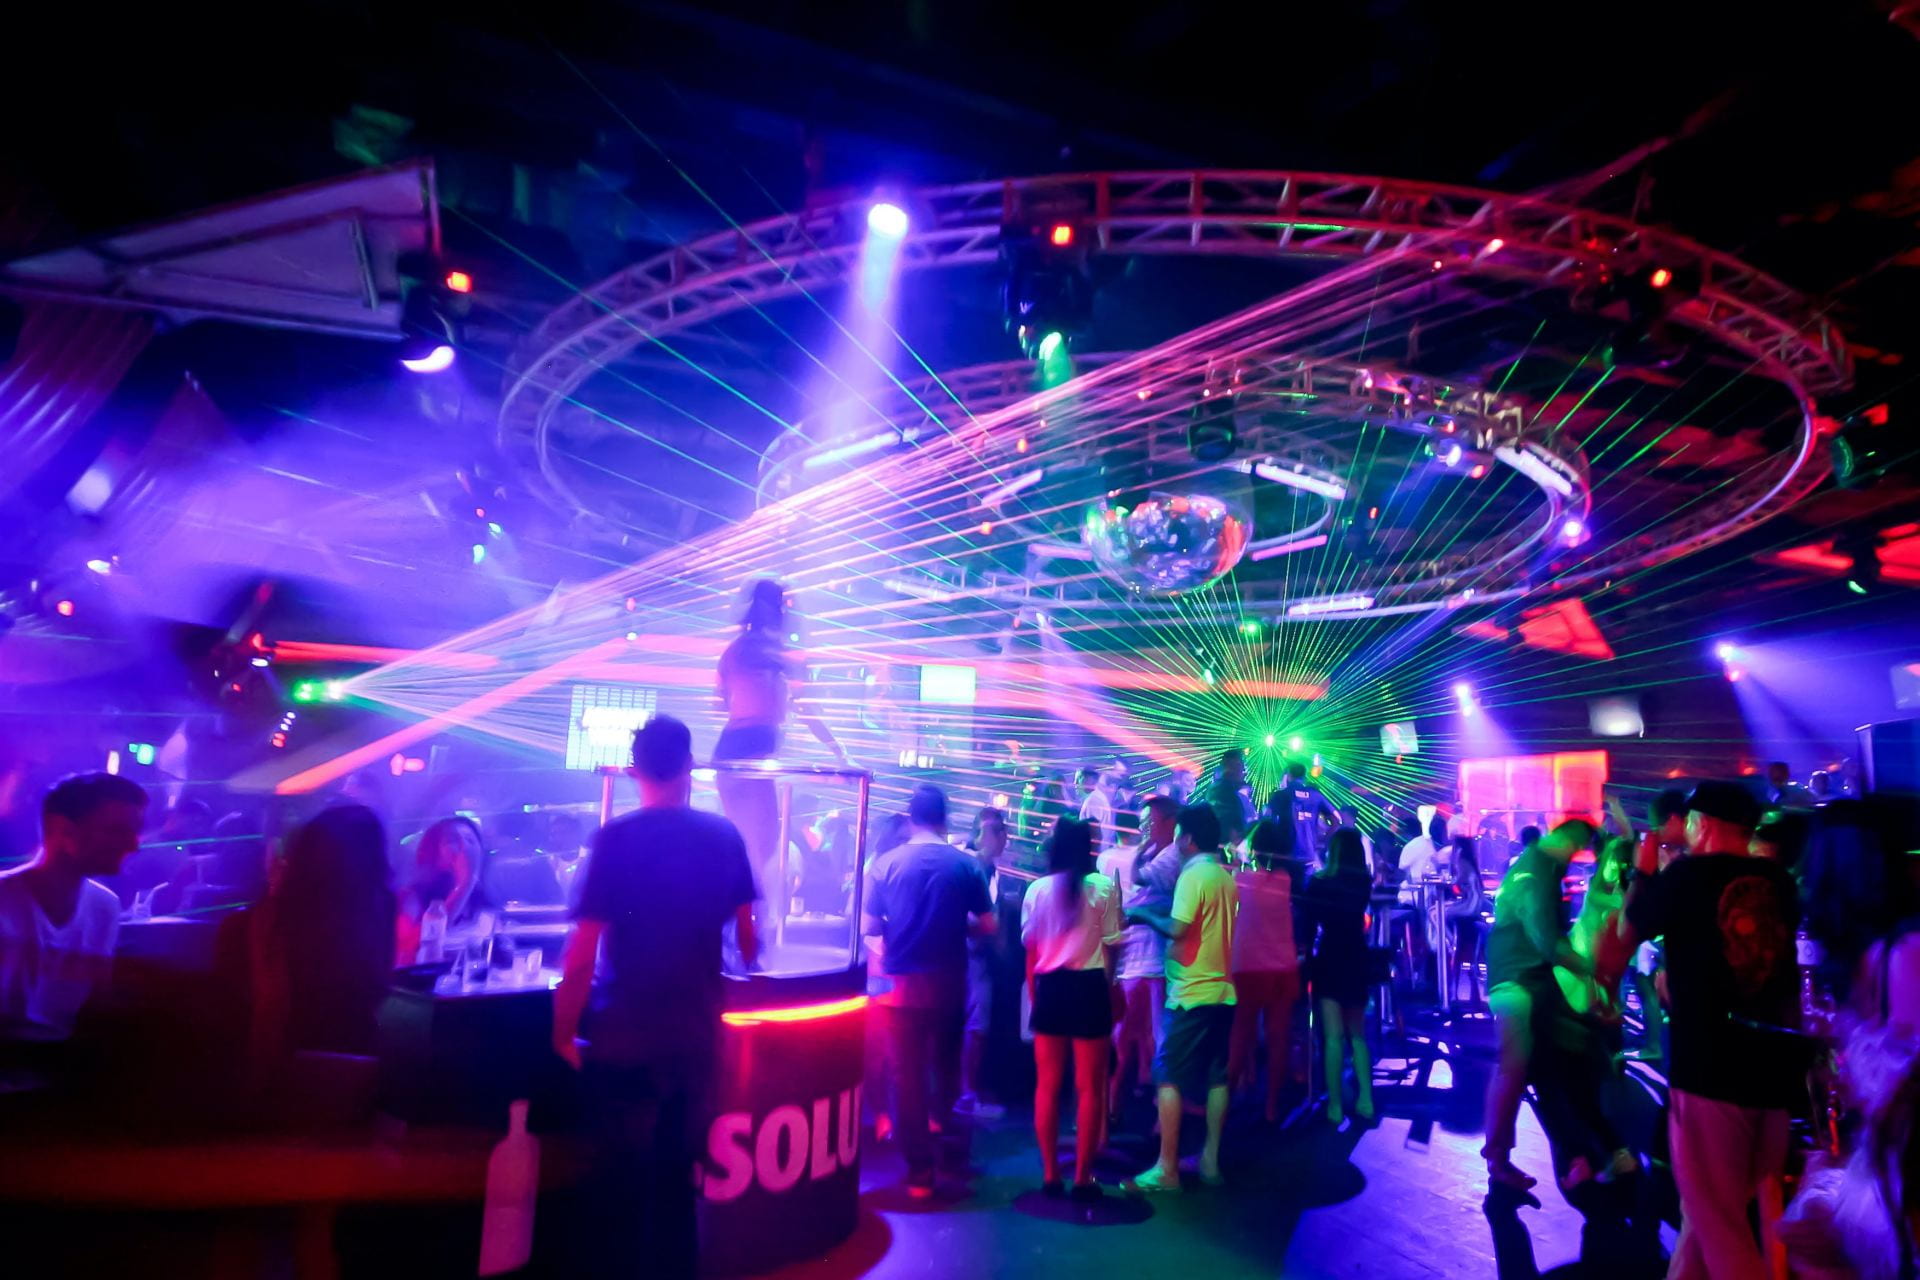 Crowded nightclub featuring strobe lights.